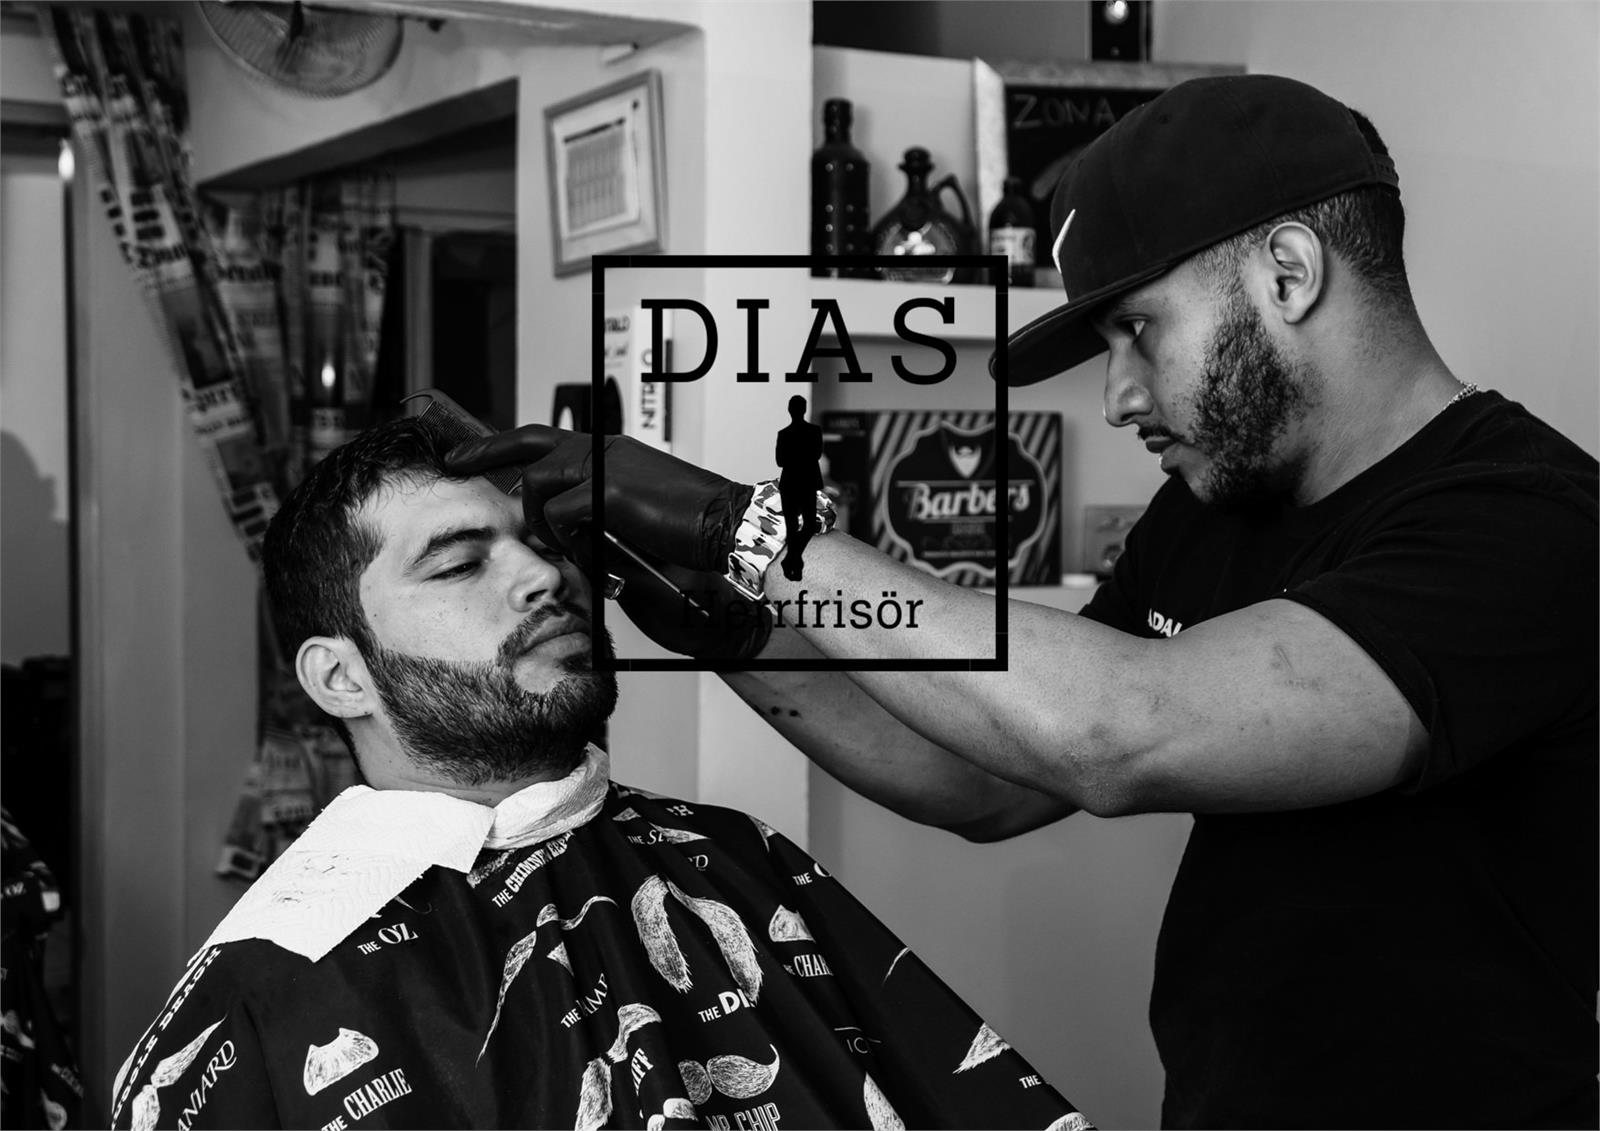 Herrfrisör Dias - Klippning & Barbershop